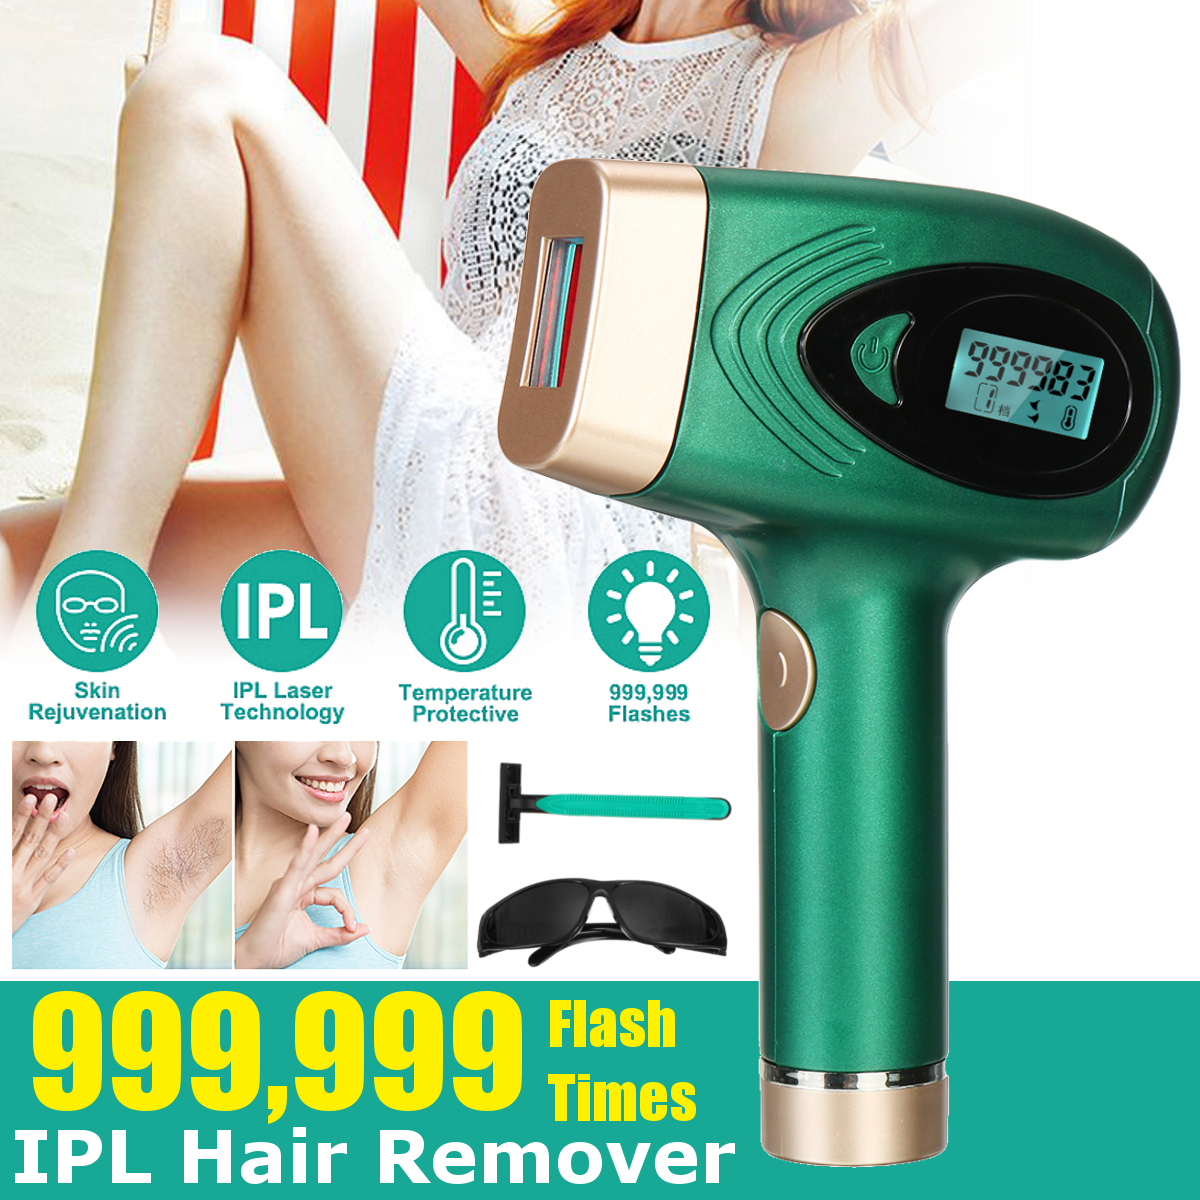 Epilators 999999 Flash IPL Laser Hair Remover 9 Levels